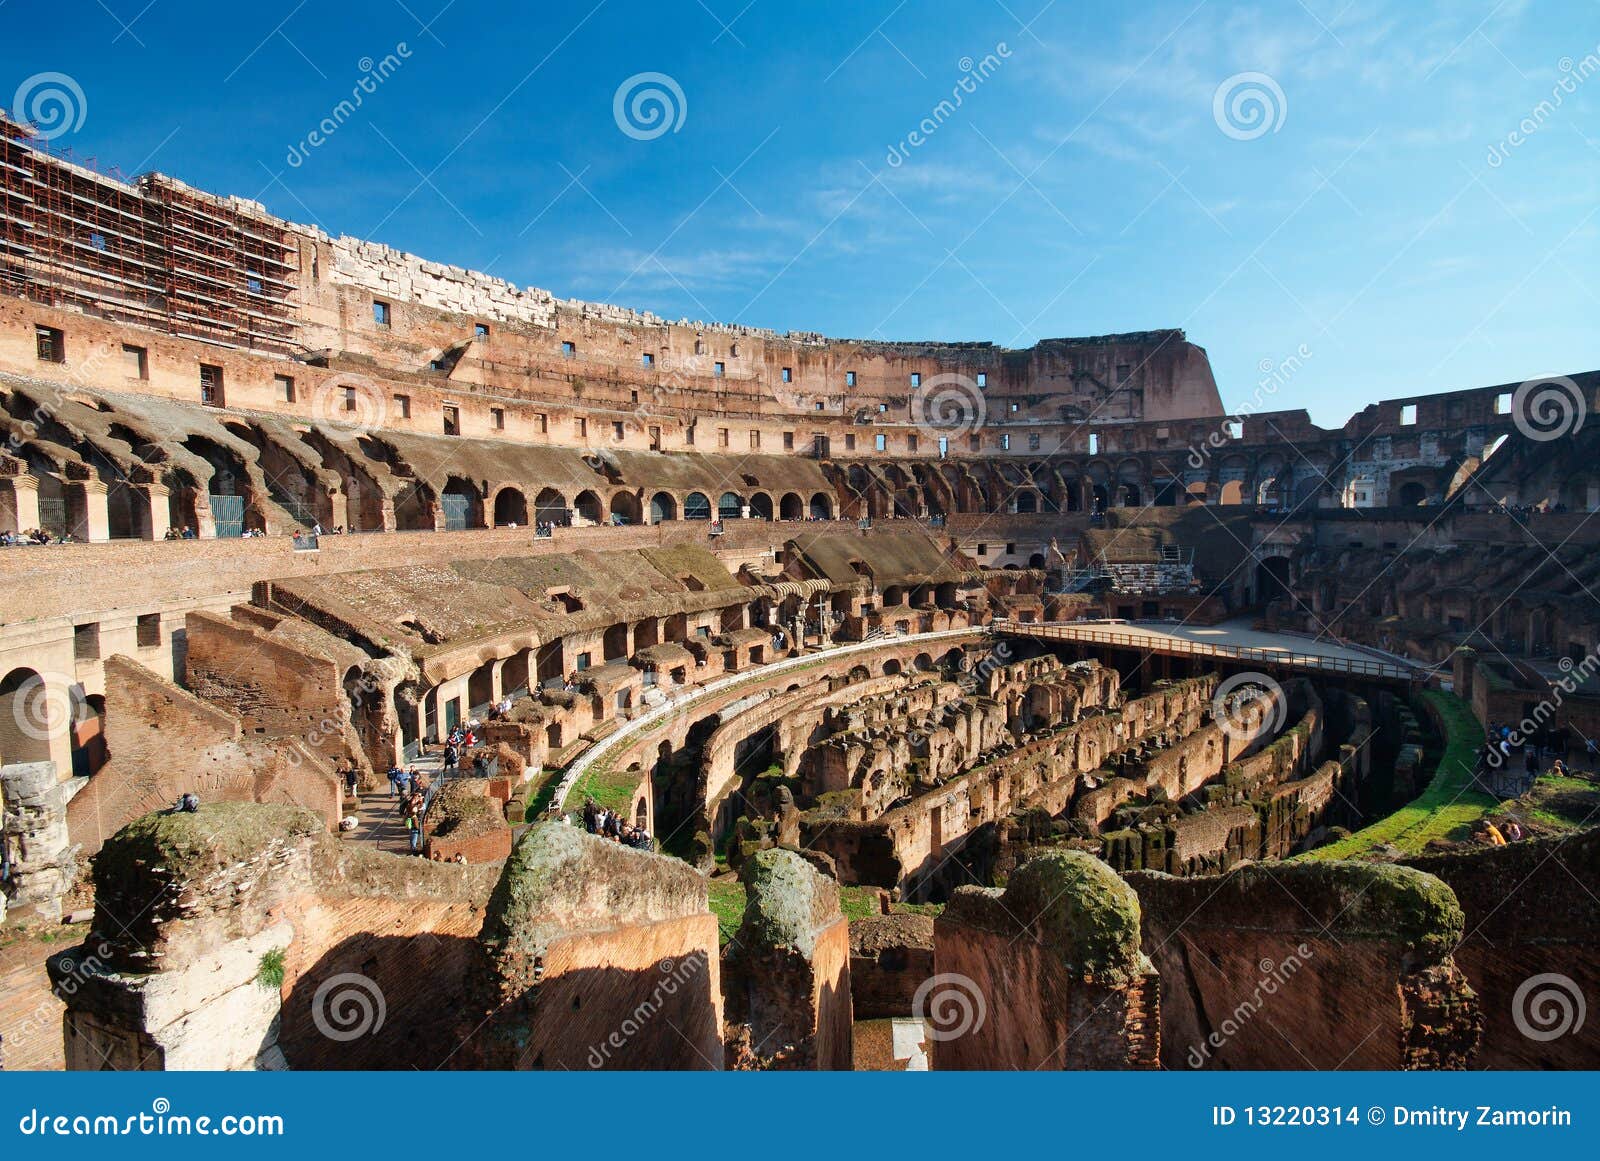 italy. rome ( roma ). colosseo (coliseum)